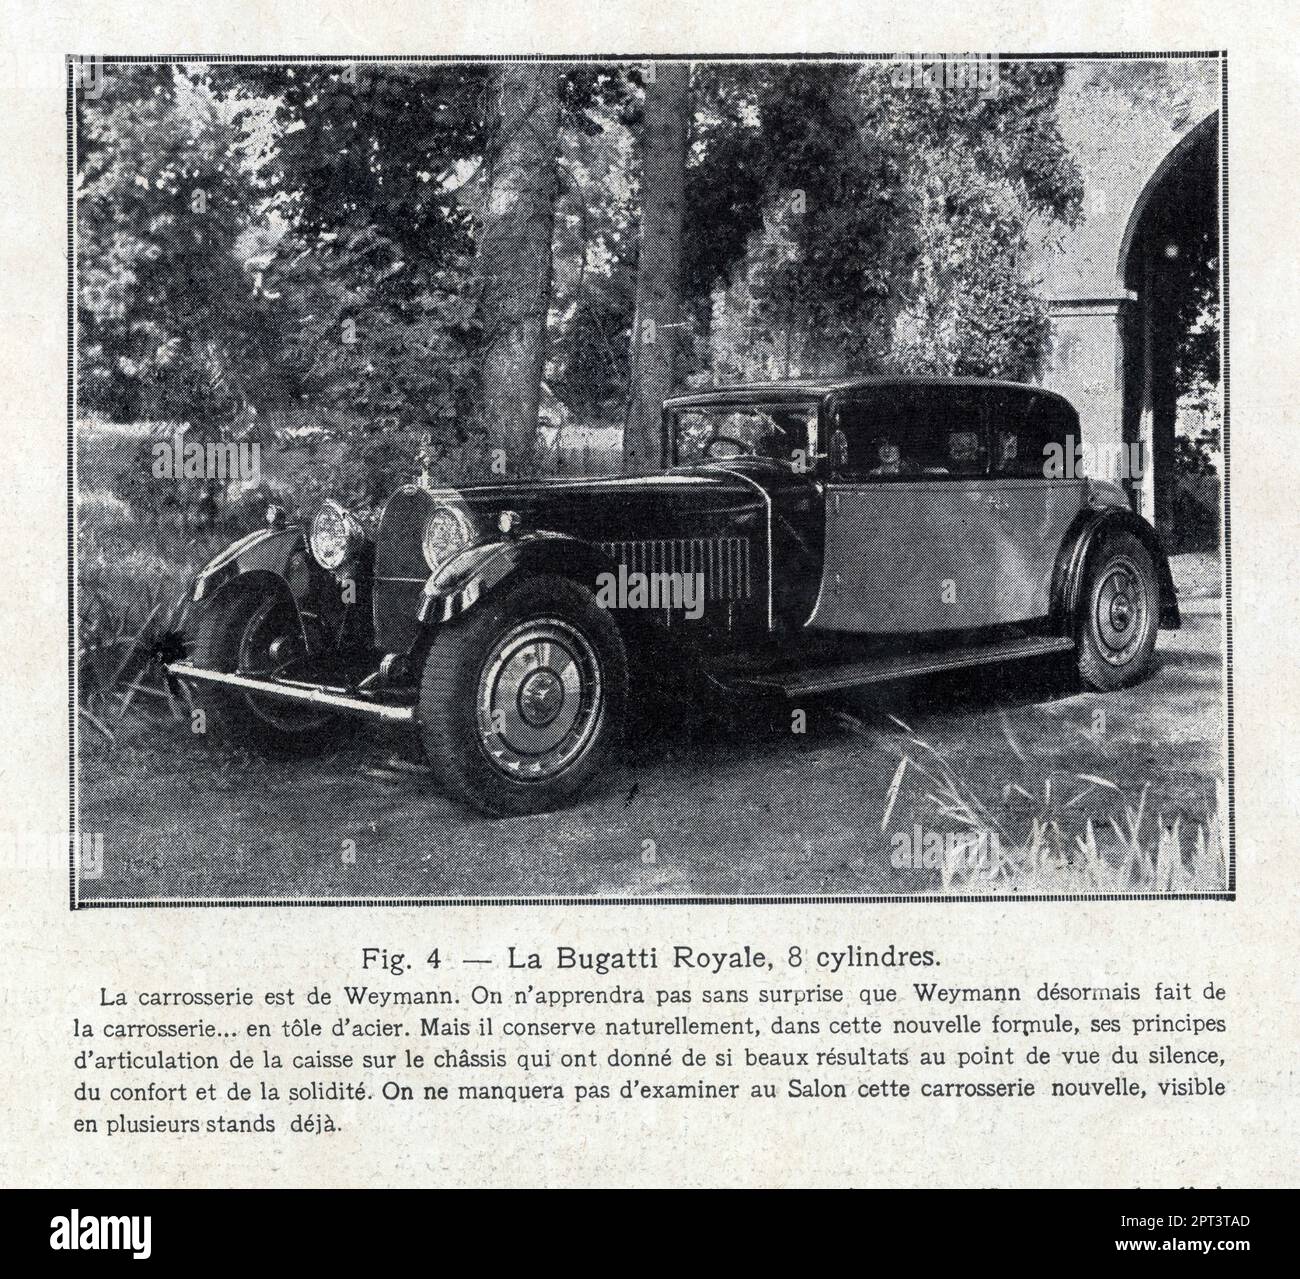 LA BUGATTI ROYALE 8 CYLINDRES. 1929 Foto Stock